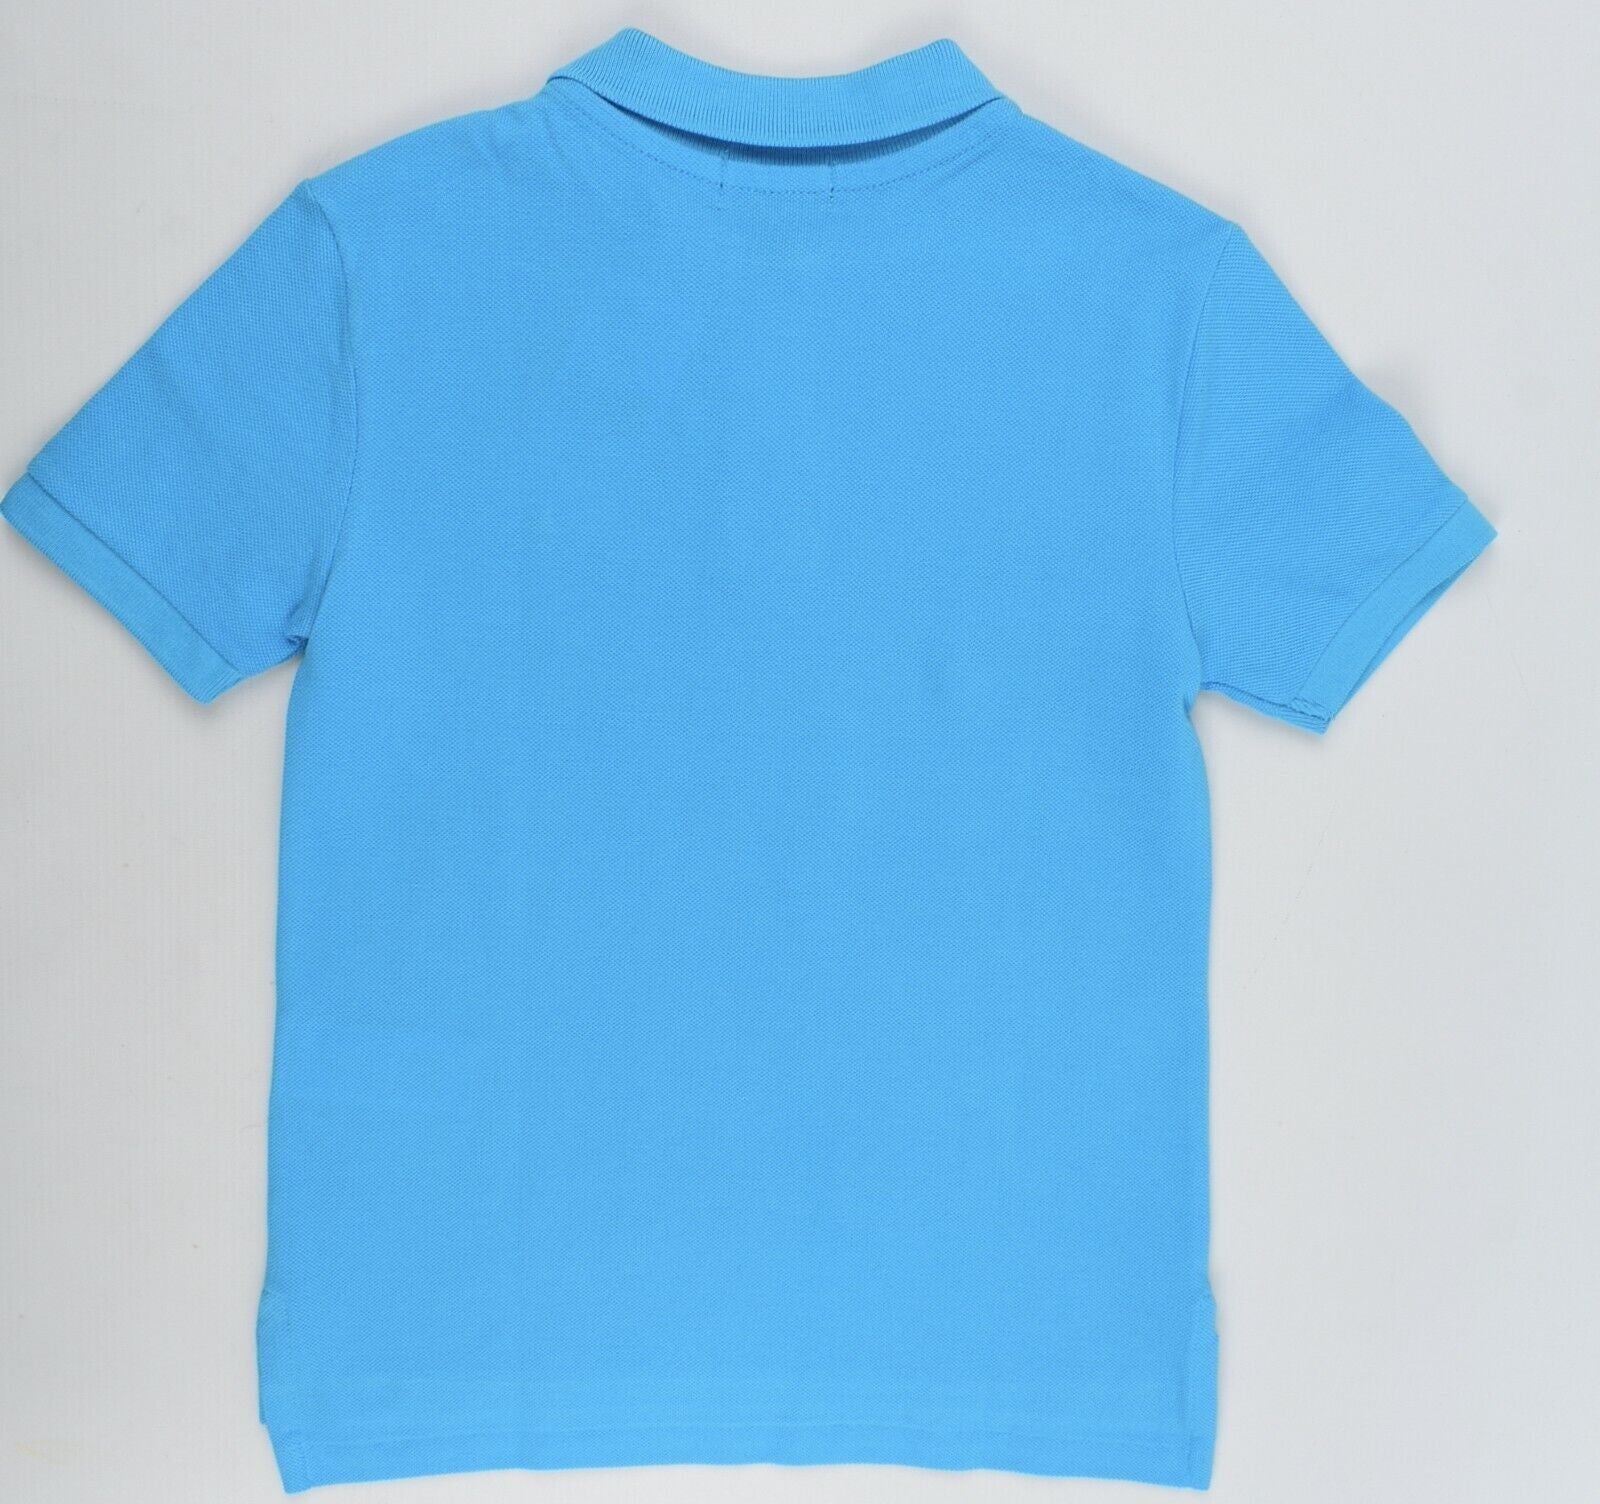 POLO RALPH LAUREN Boys' Kids' Polo Shirt, Turquoise Blue, size 6 years